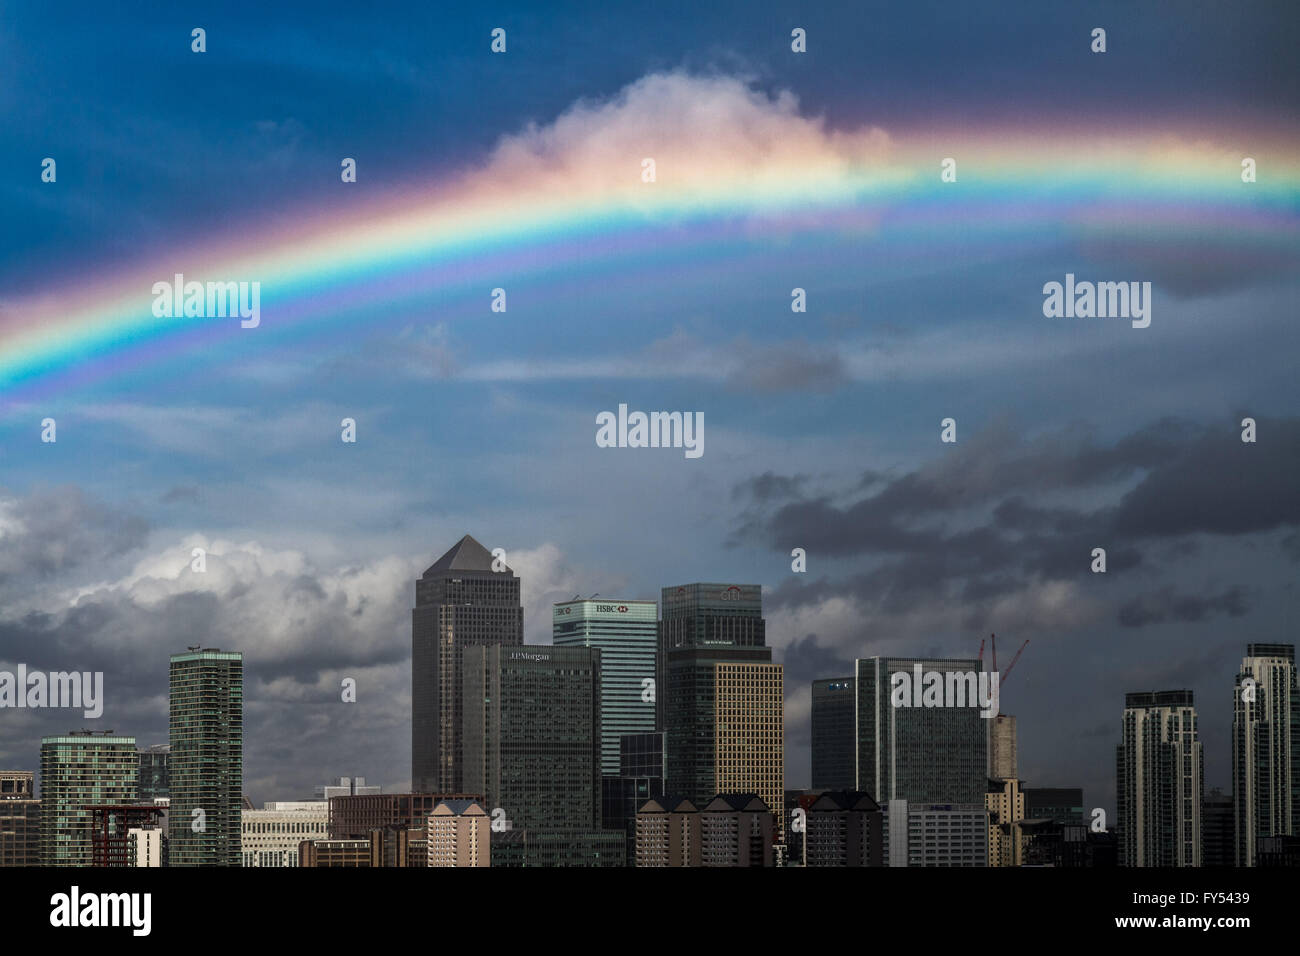 A massive colourful rainbow seen over south east London including Canary Wharf business park buildings Stock Photo